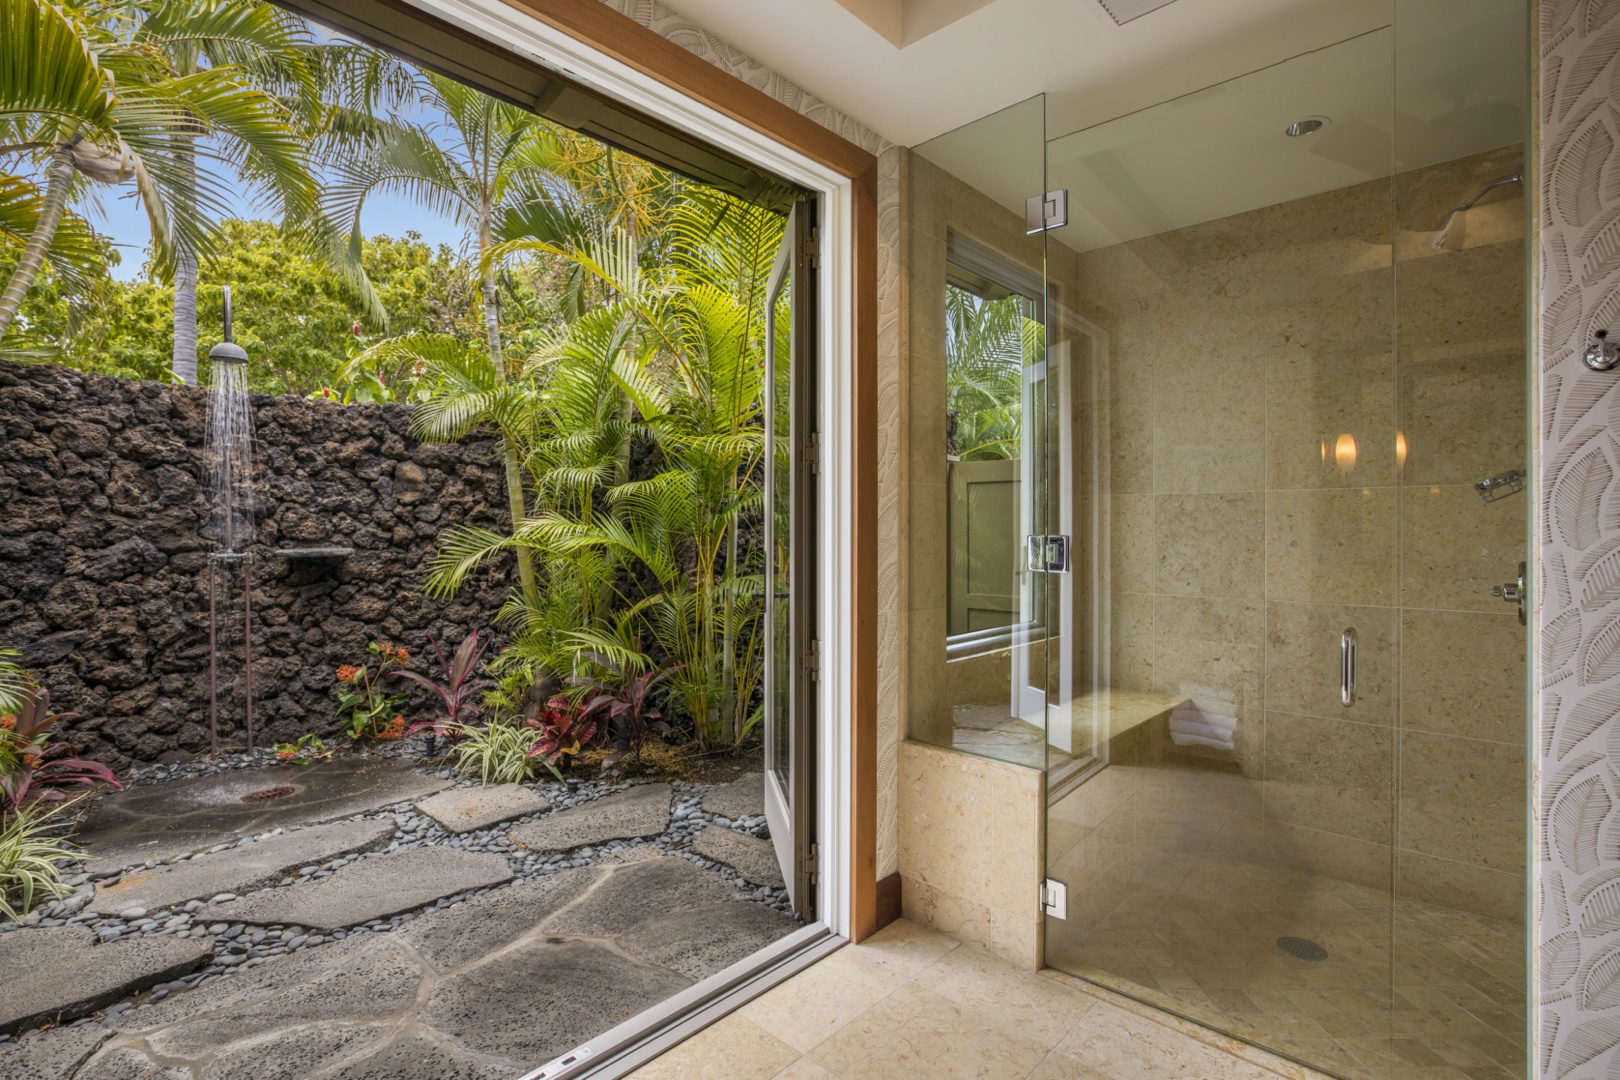 Kailua Kona Vacation Rentals, 4BD Kahikole Street (218) Estate Home at Four Seasons Resort at Hualalai - Alternate view featuring a spacious, glass-enclosed shower